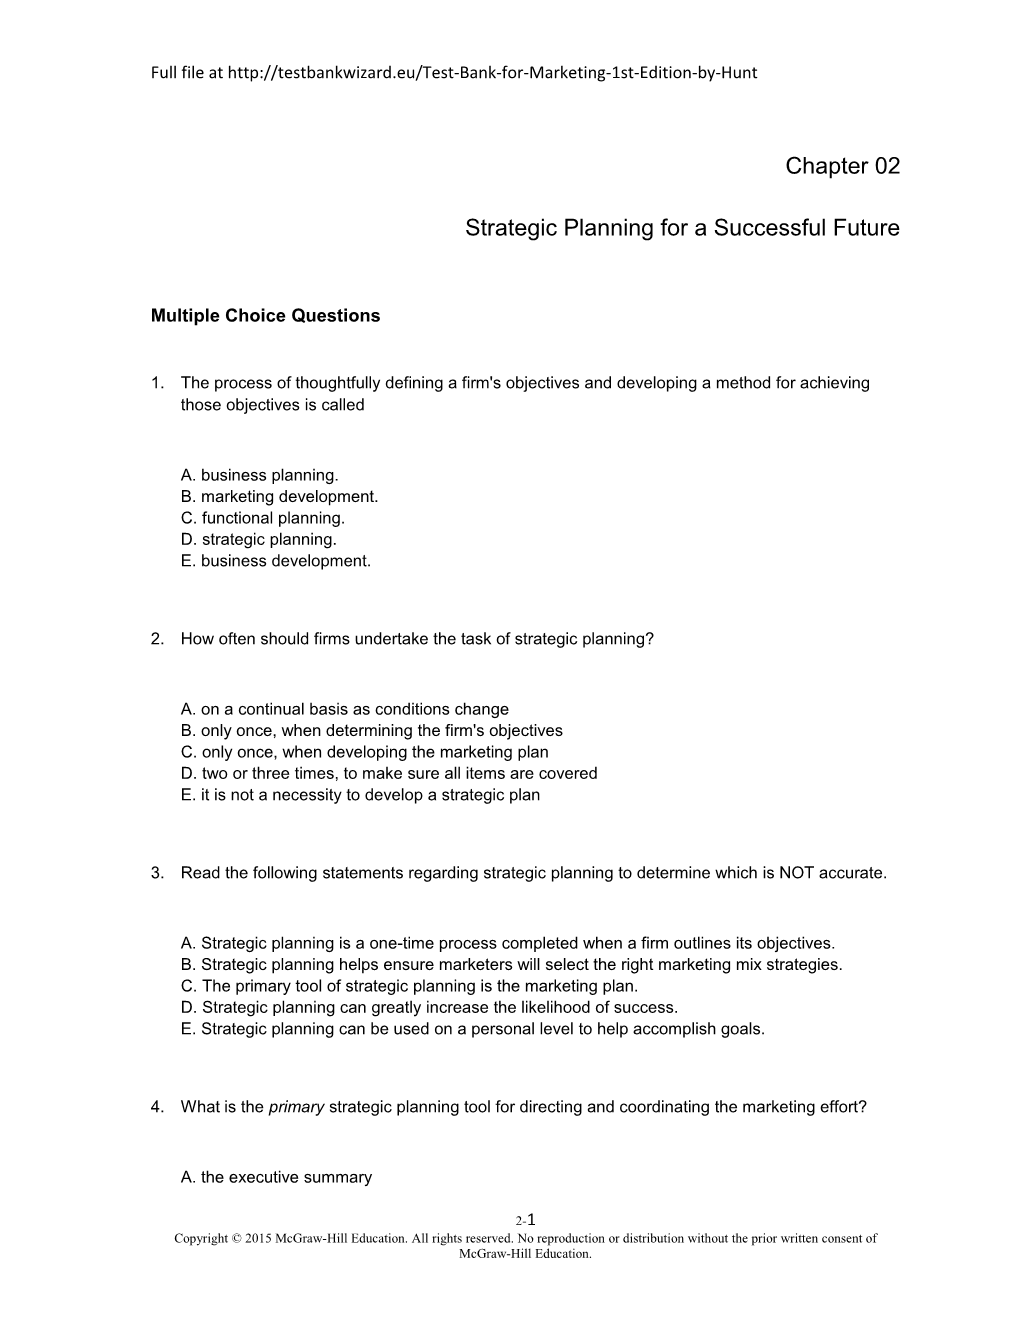 Strategic Planning for a Successful Future